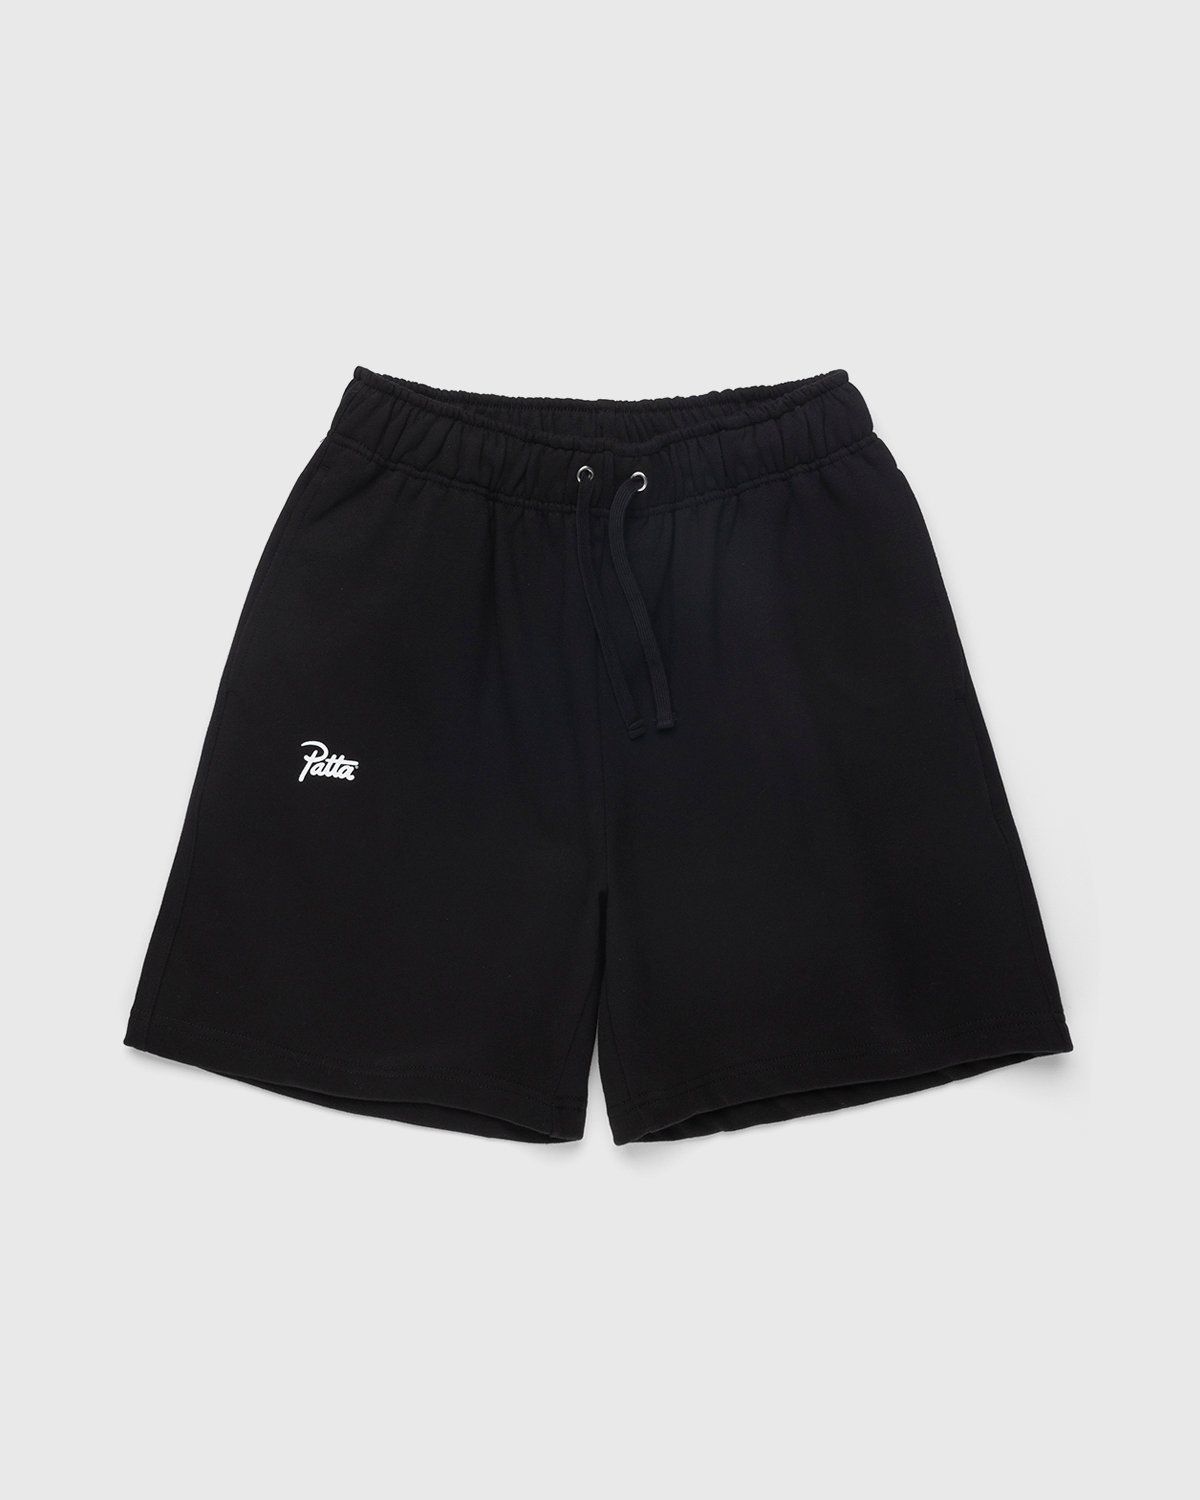 Patta – Basic Summer Jogging Shorts Black - Shorts - Black - Image 1